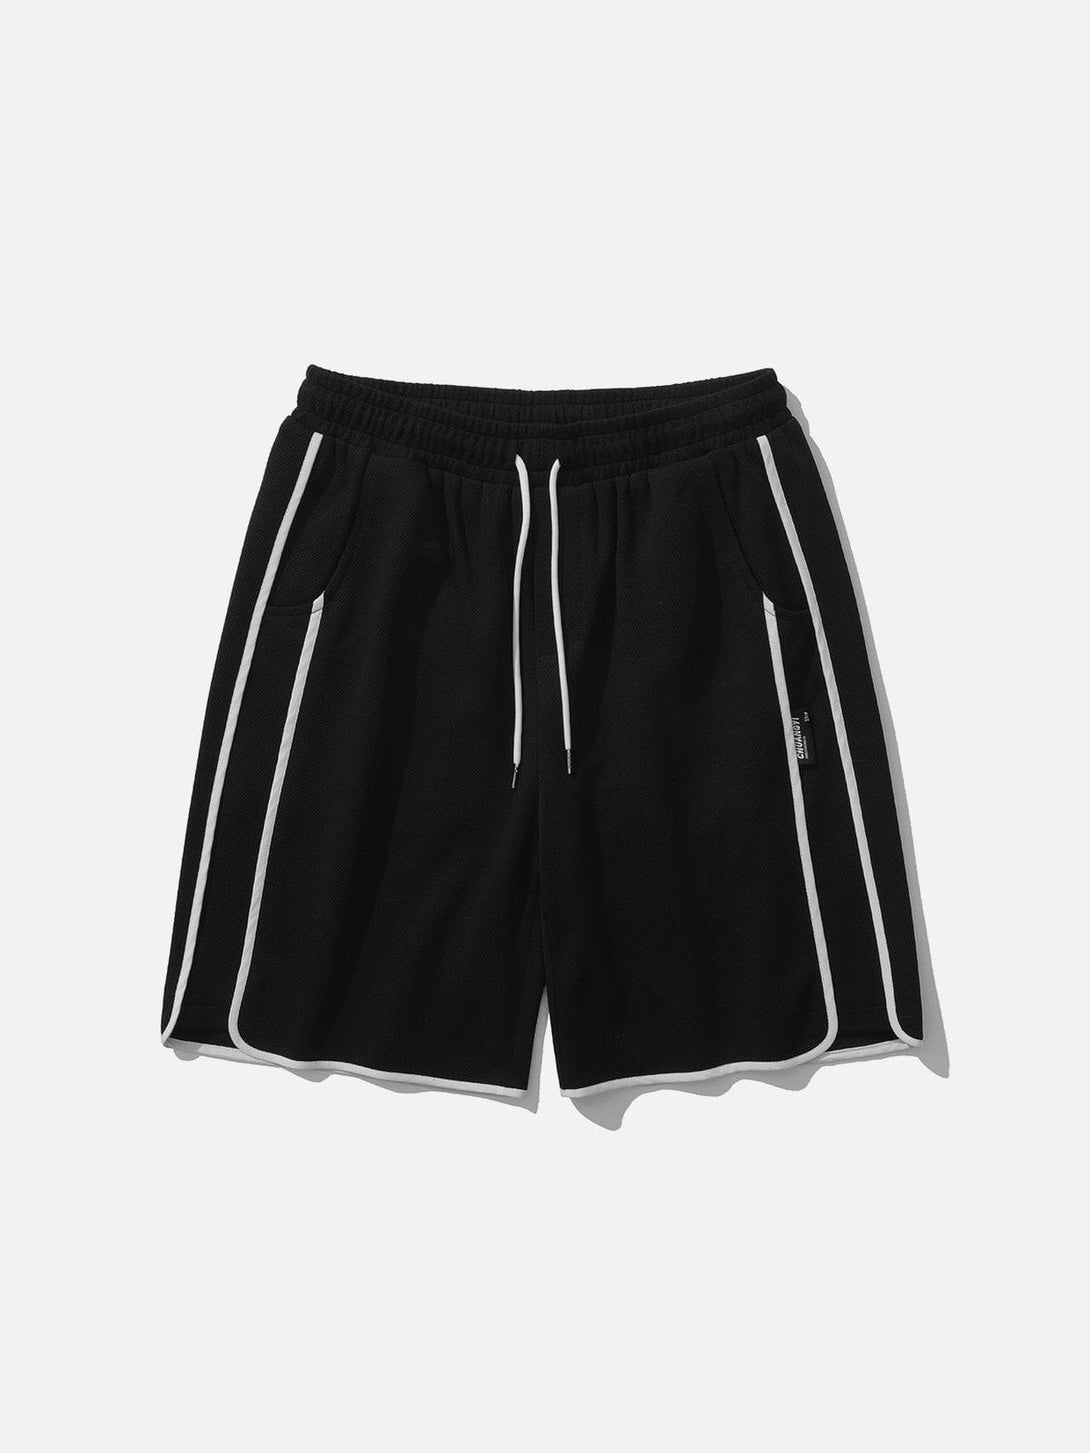 Majesda® - Side Stripe Shorts outfit ideas streetwear fashion